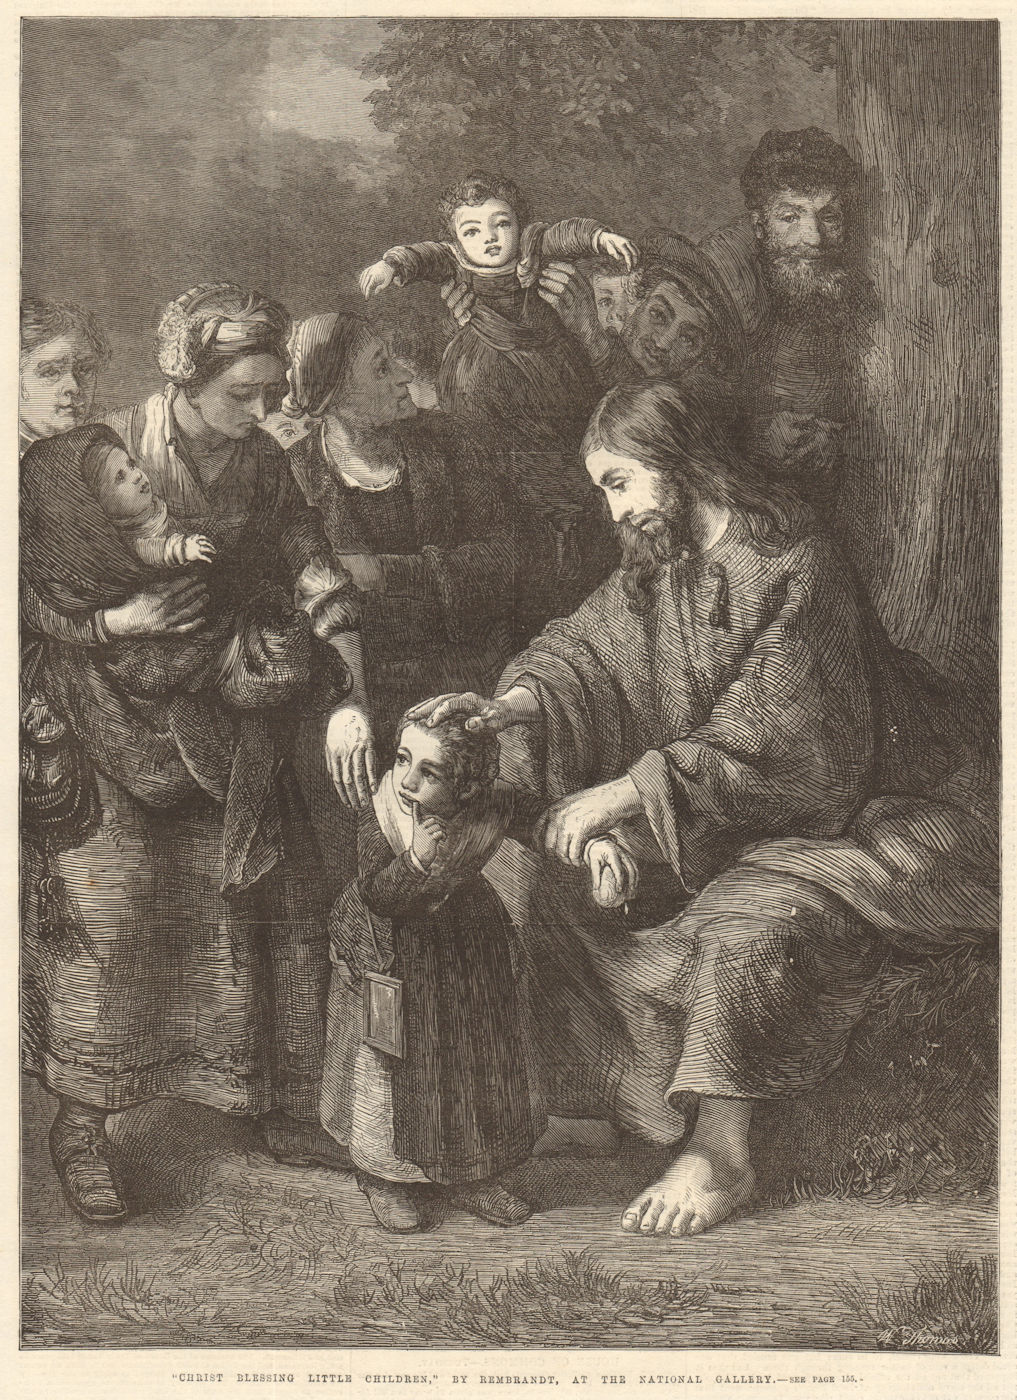 Associate Product "Christ blessing little children" by Rembrandt. Bible. Fine Arts 1867